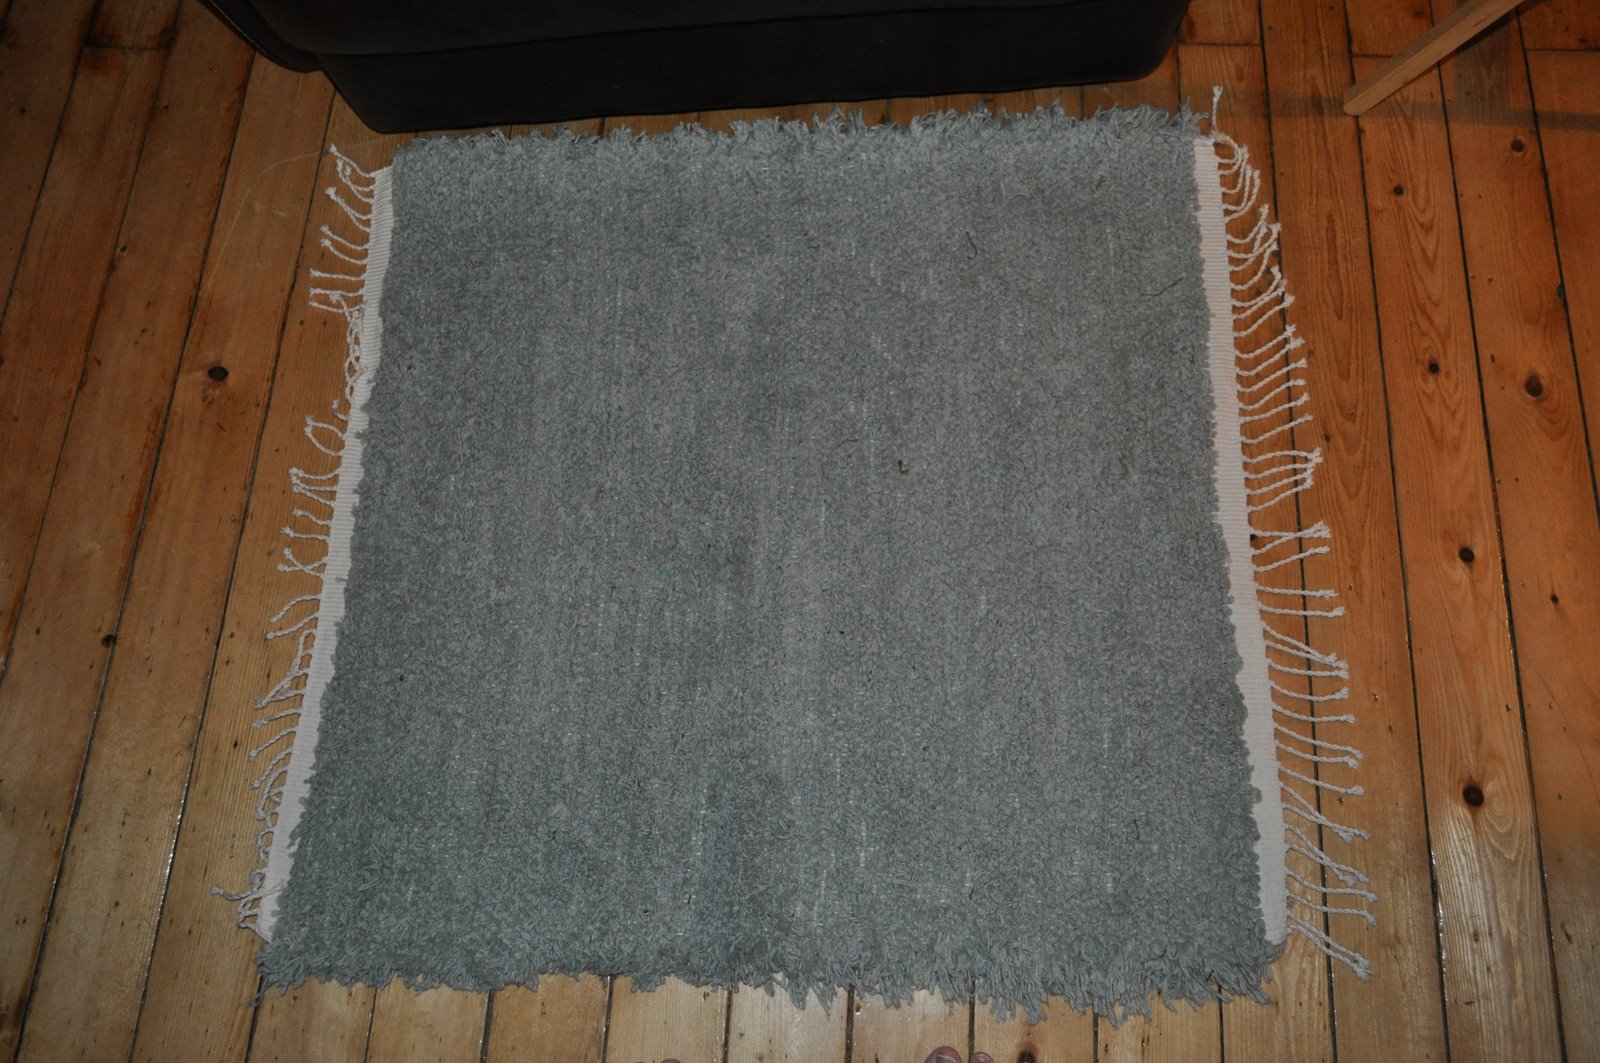 South View Farm and Weaving: Weaving (rag rugs)